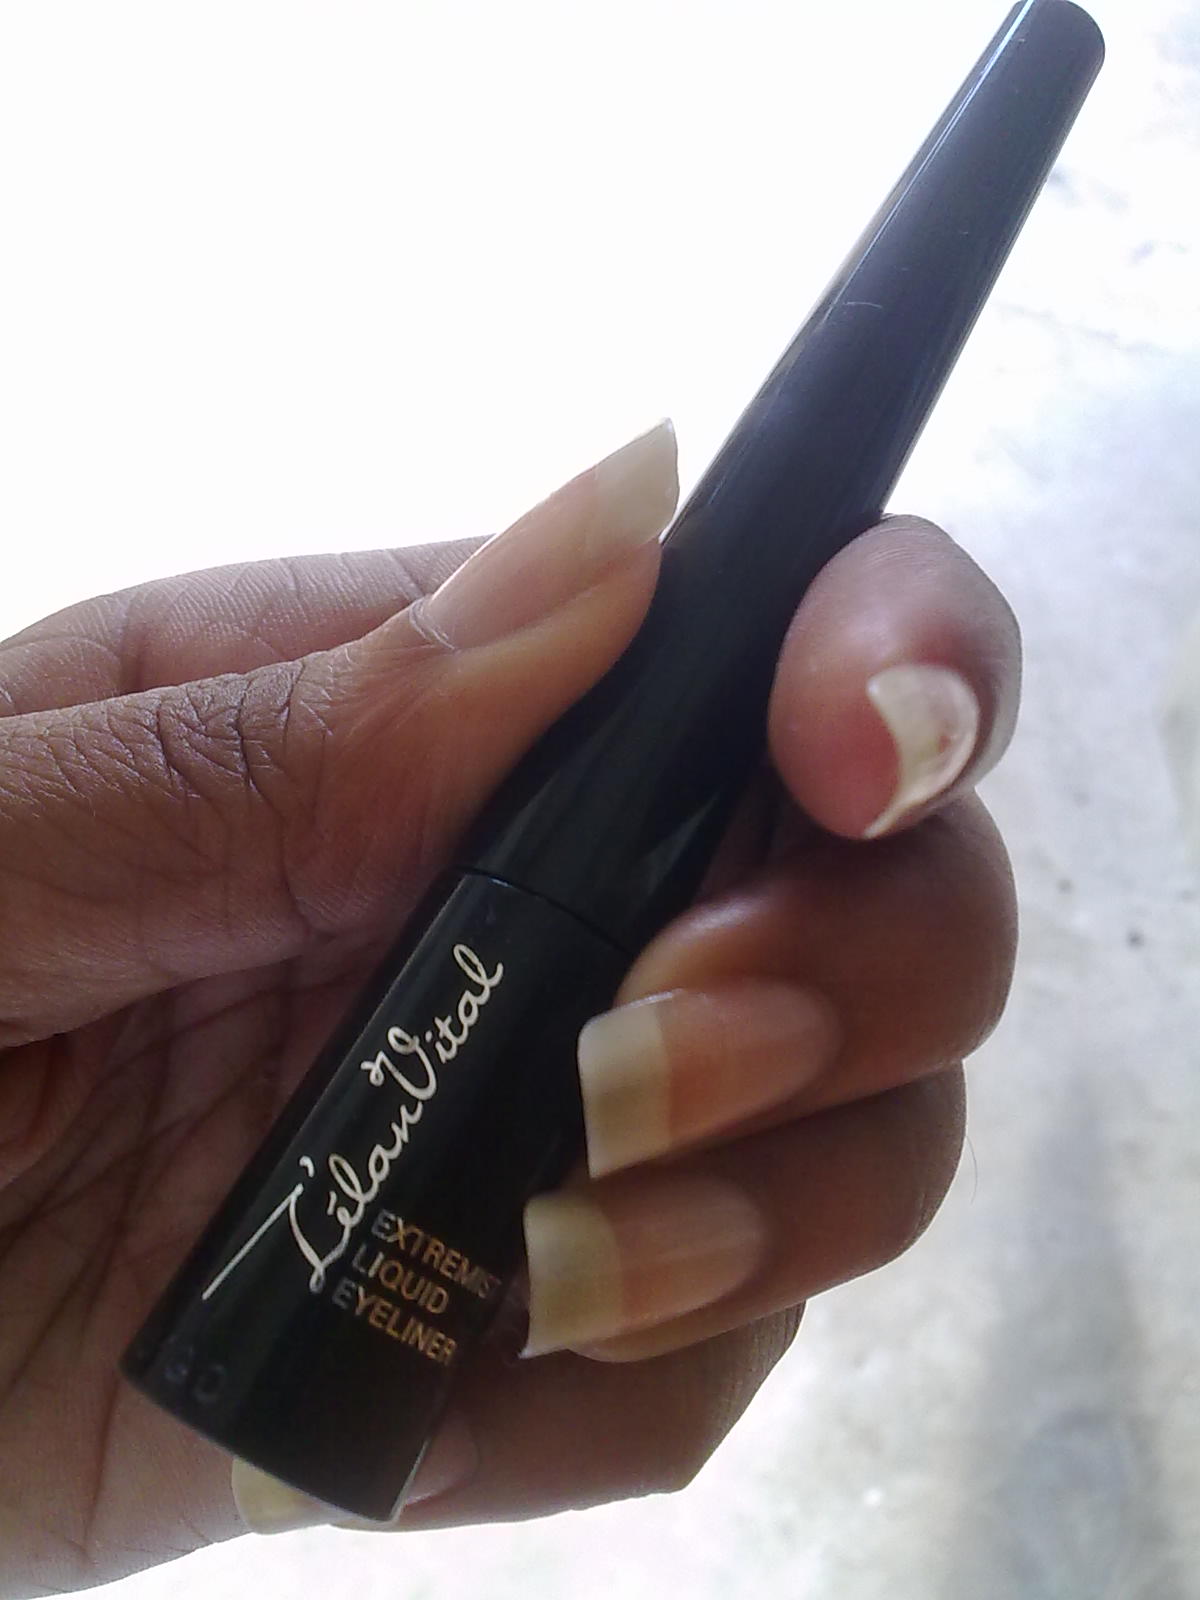 Black Radiance Waterproof Liquid Eyeliner, Black Velvet, 0.17 Fluid Ounce